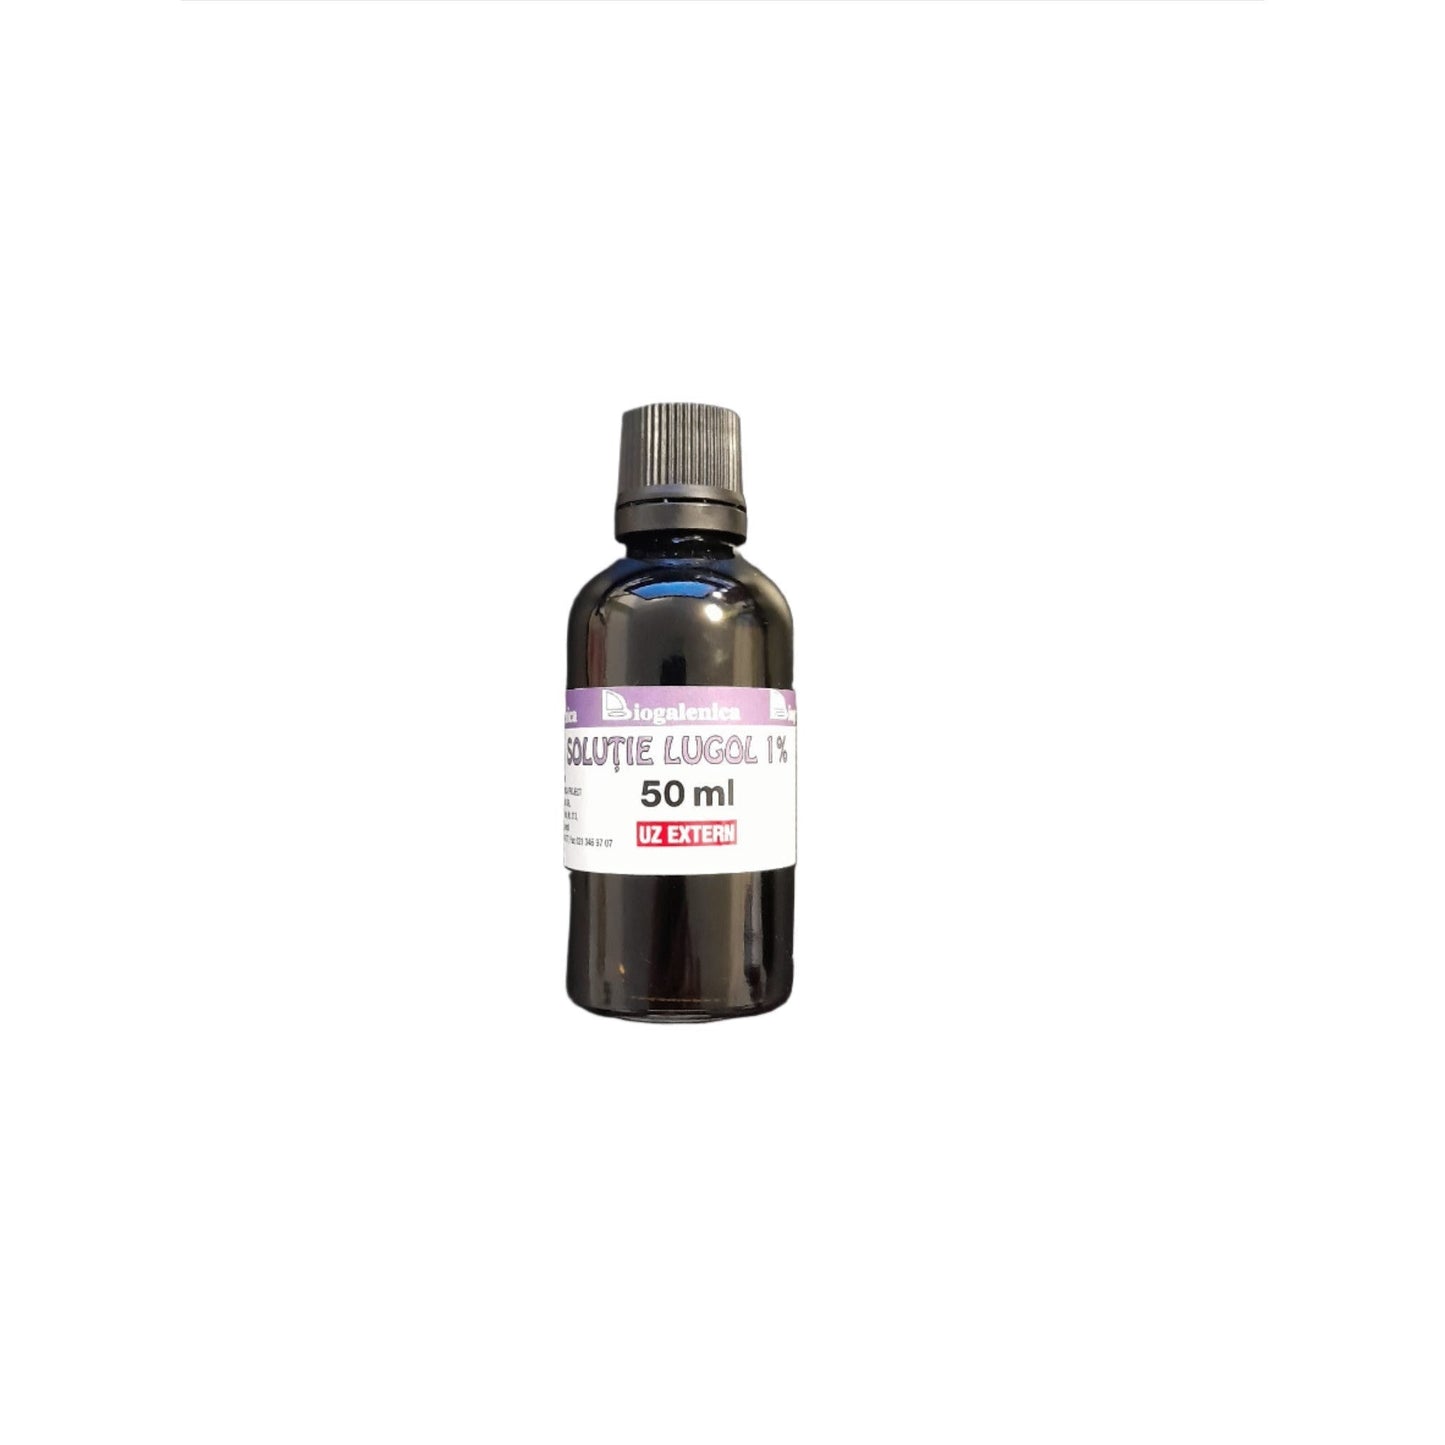 Solutie Lugol 1%, 50 ml, Biogalenica-